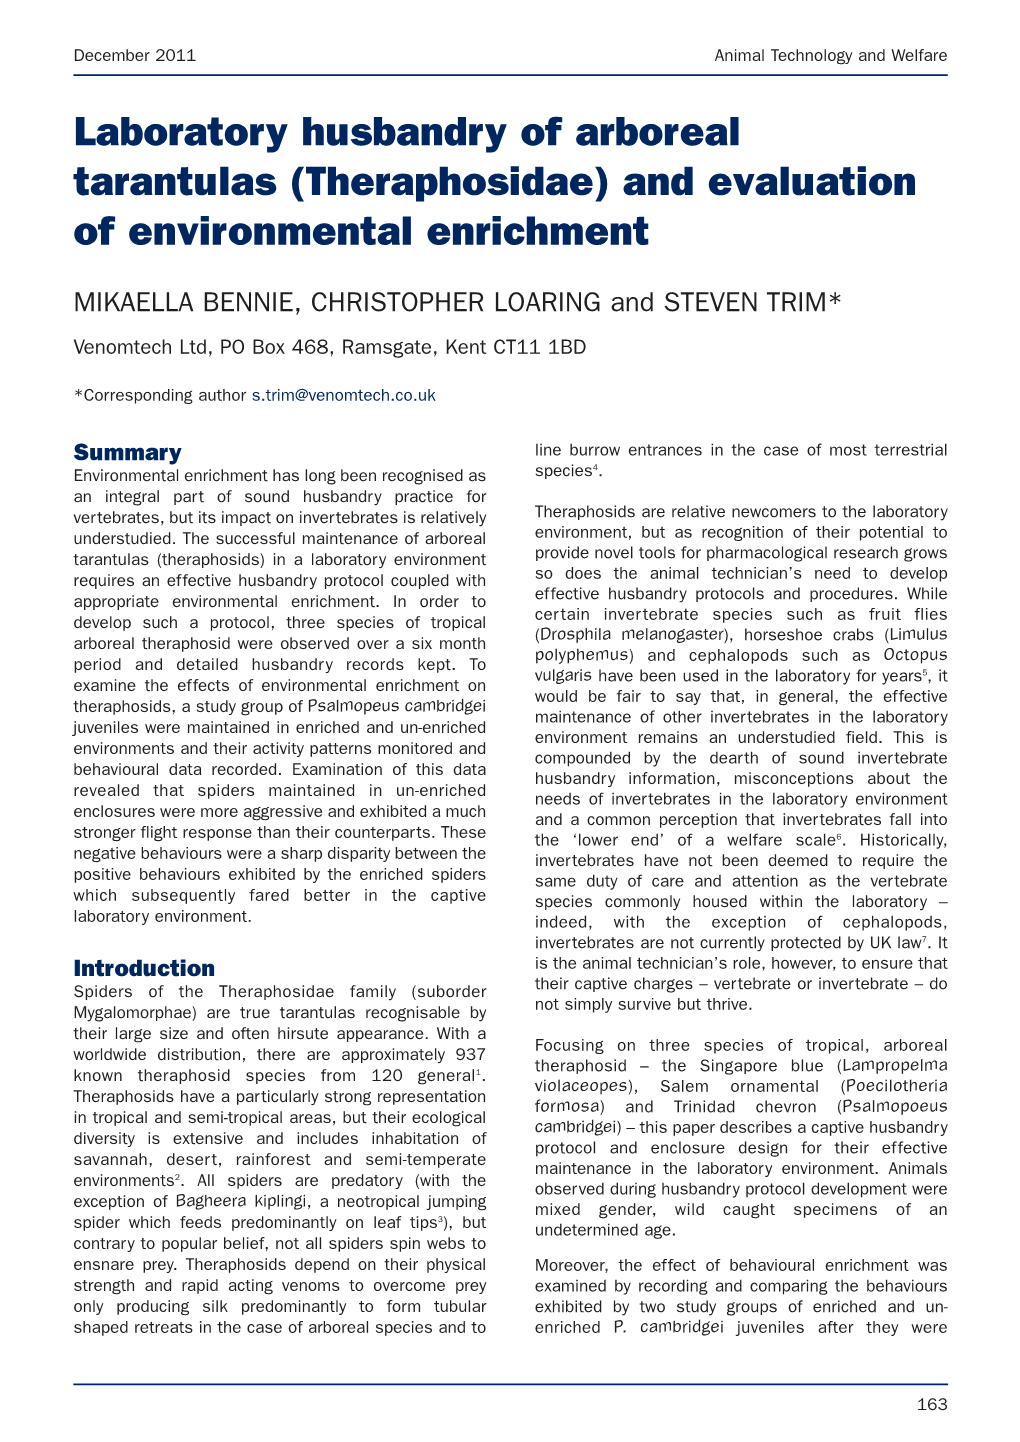 Laboratory Husbandry of Arboreal Tarantulas (Theraphosidae) and Evaluation of Environmental Enrichment